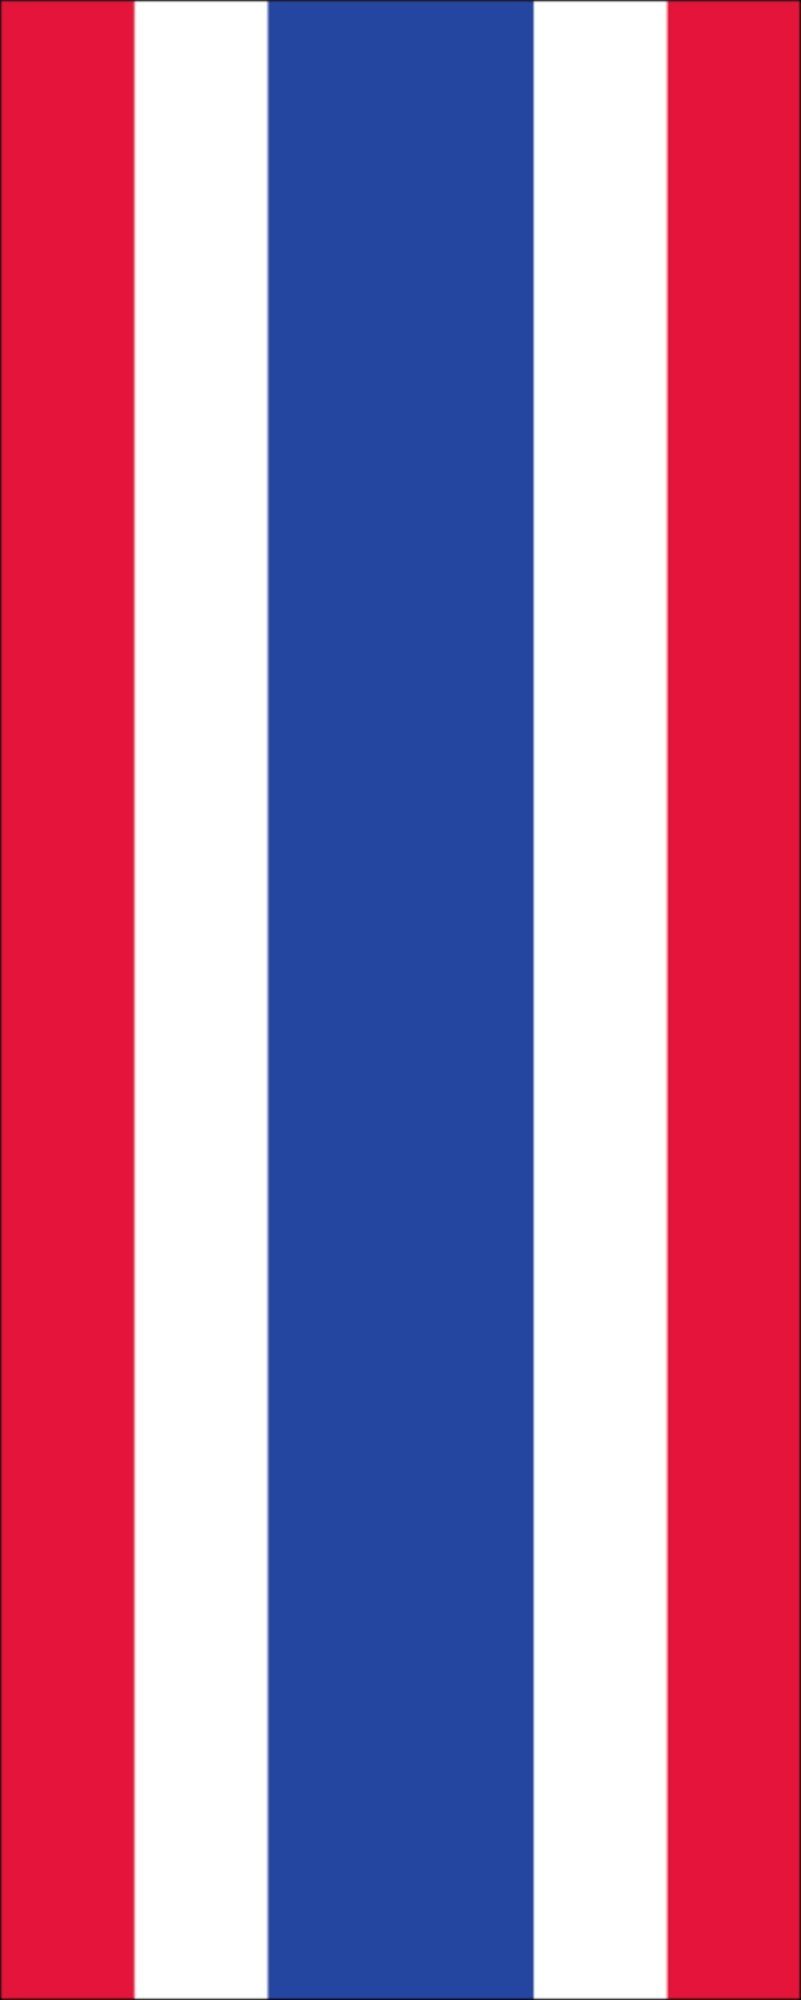 110 Thailand flaggenmeer Hochformat Flagge g/m² Flagge